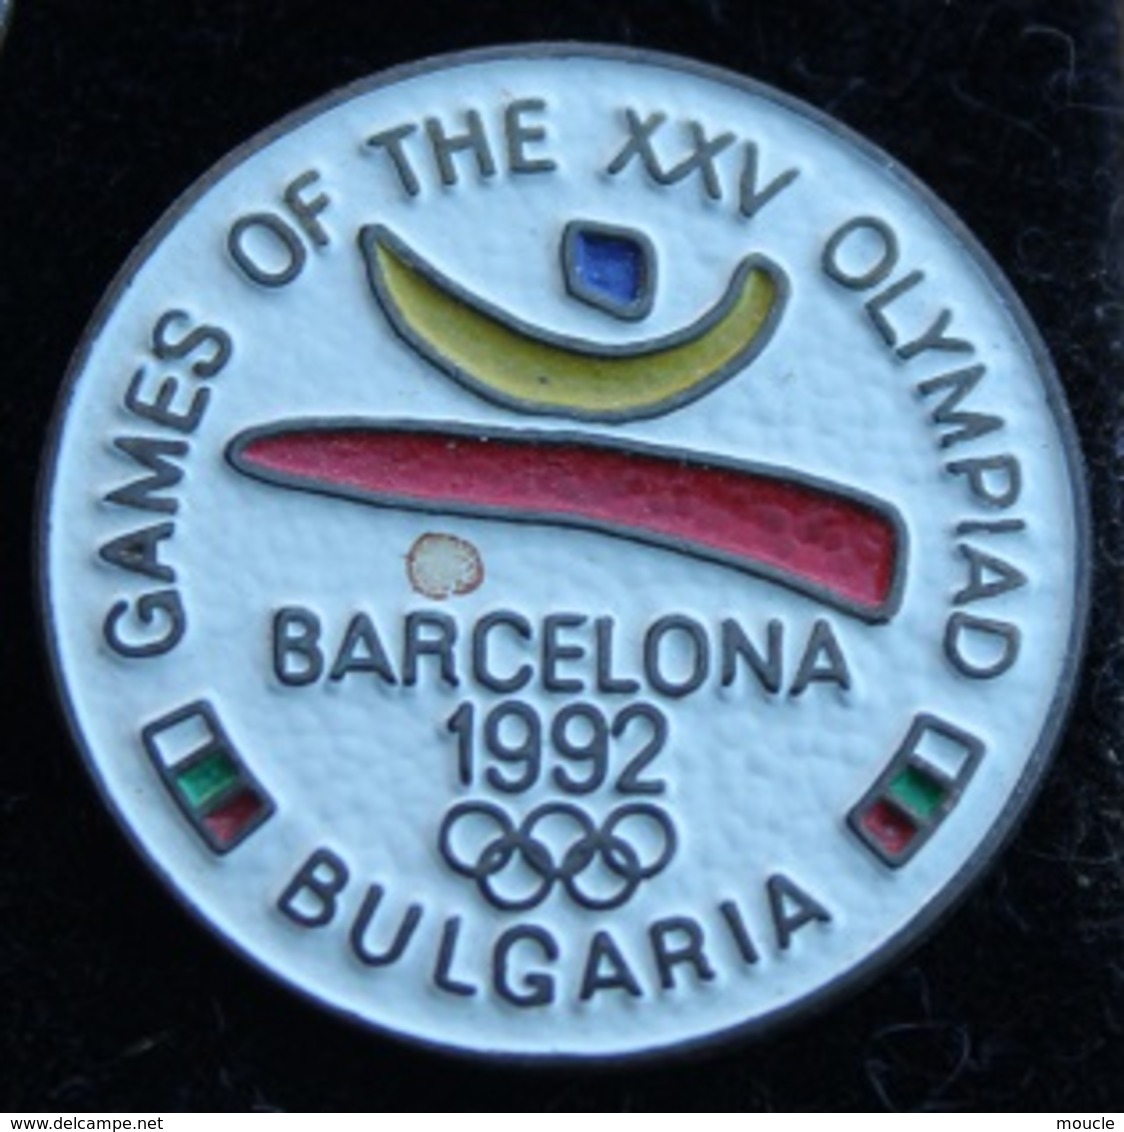 BARCELONA 1992 - JEUX OLYMPIQUES - COMITE OLYMPIQUE BULGARE - BULGARIE - BULGARIA -    (21) - Giochi Olimpici